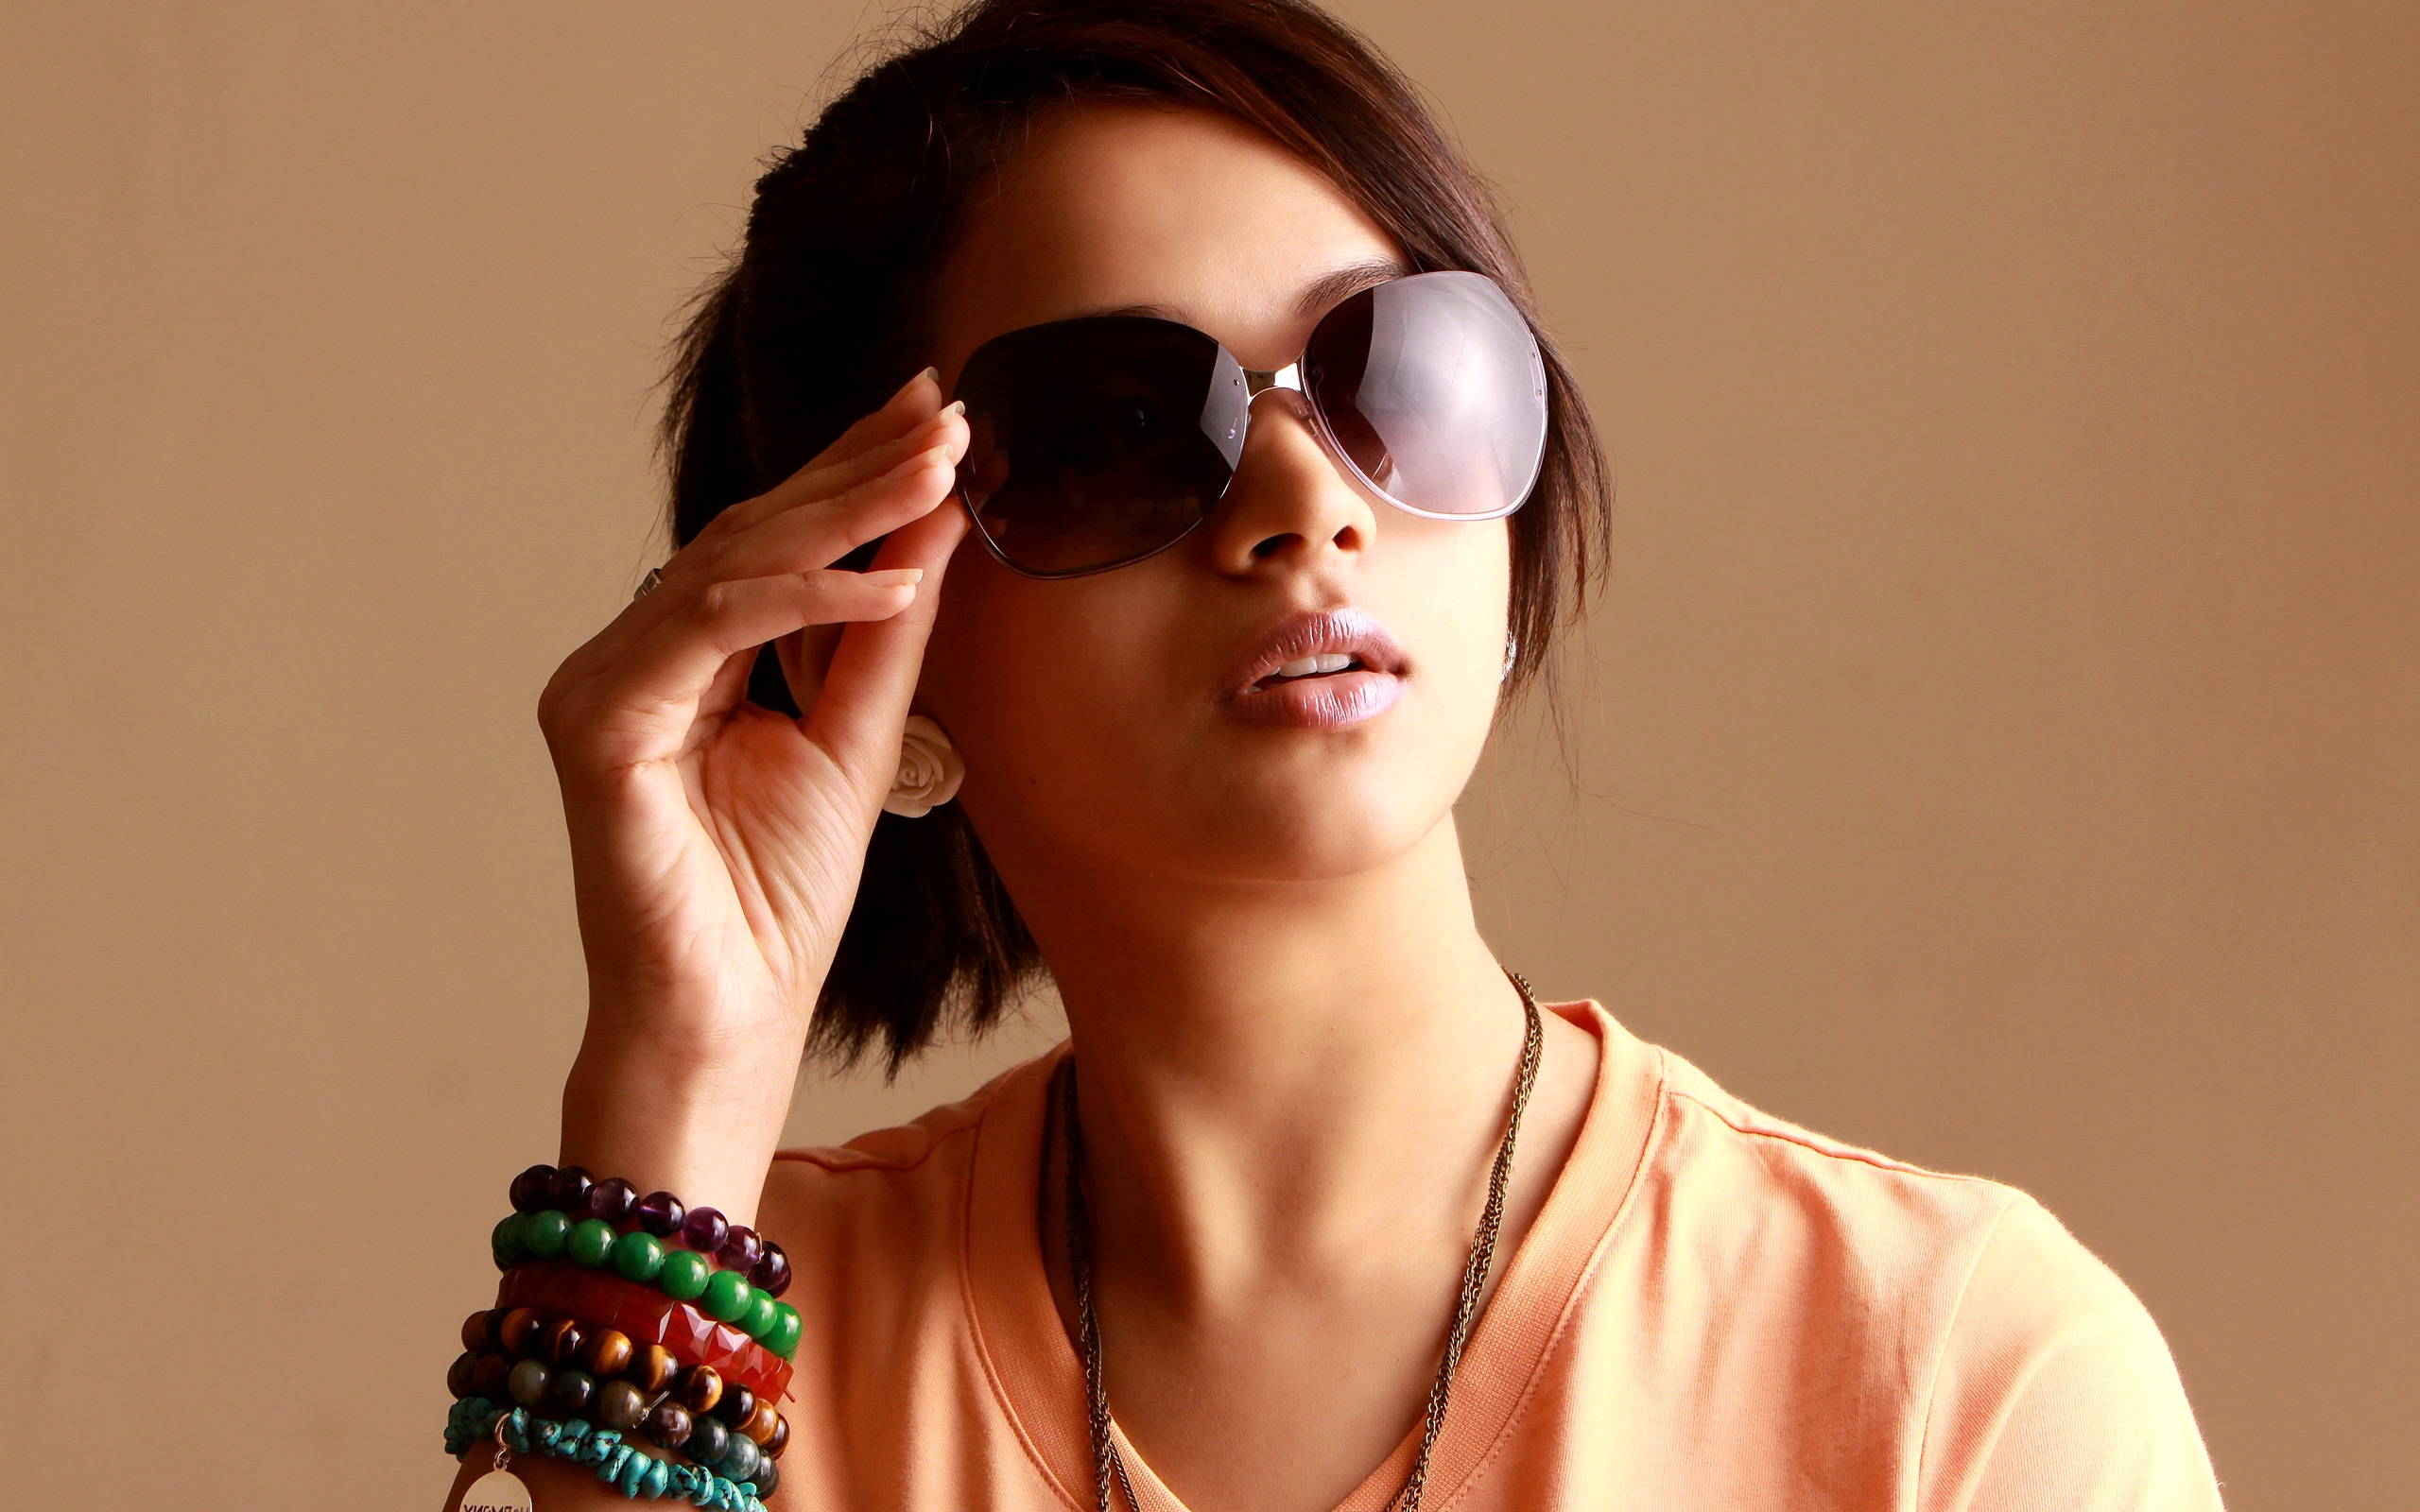 tamil movies hd wallpapers 1080p,eyewear,sunglasses,hair,glasses,cool